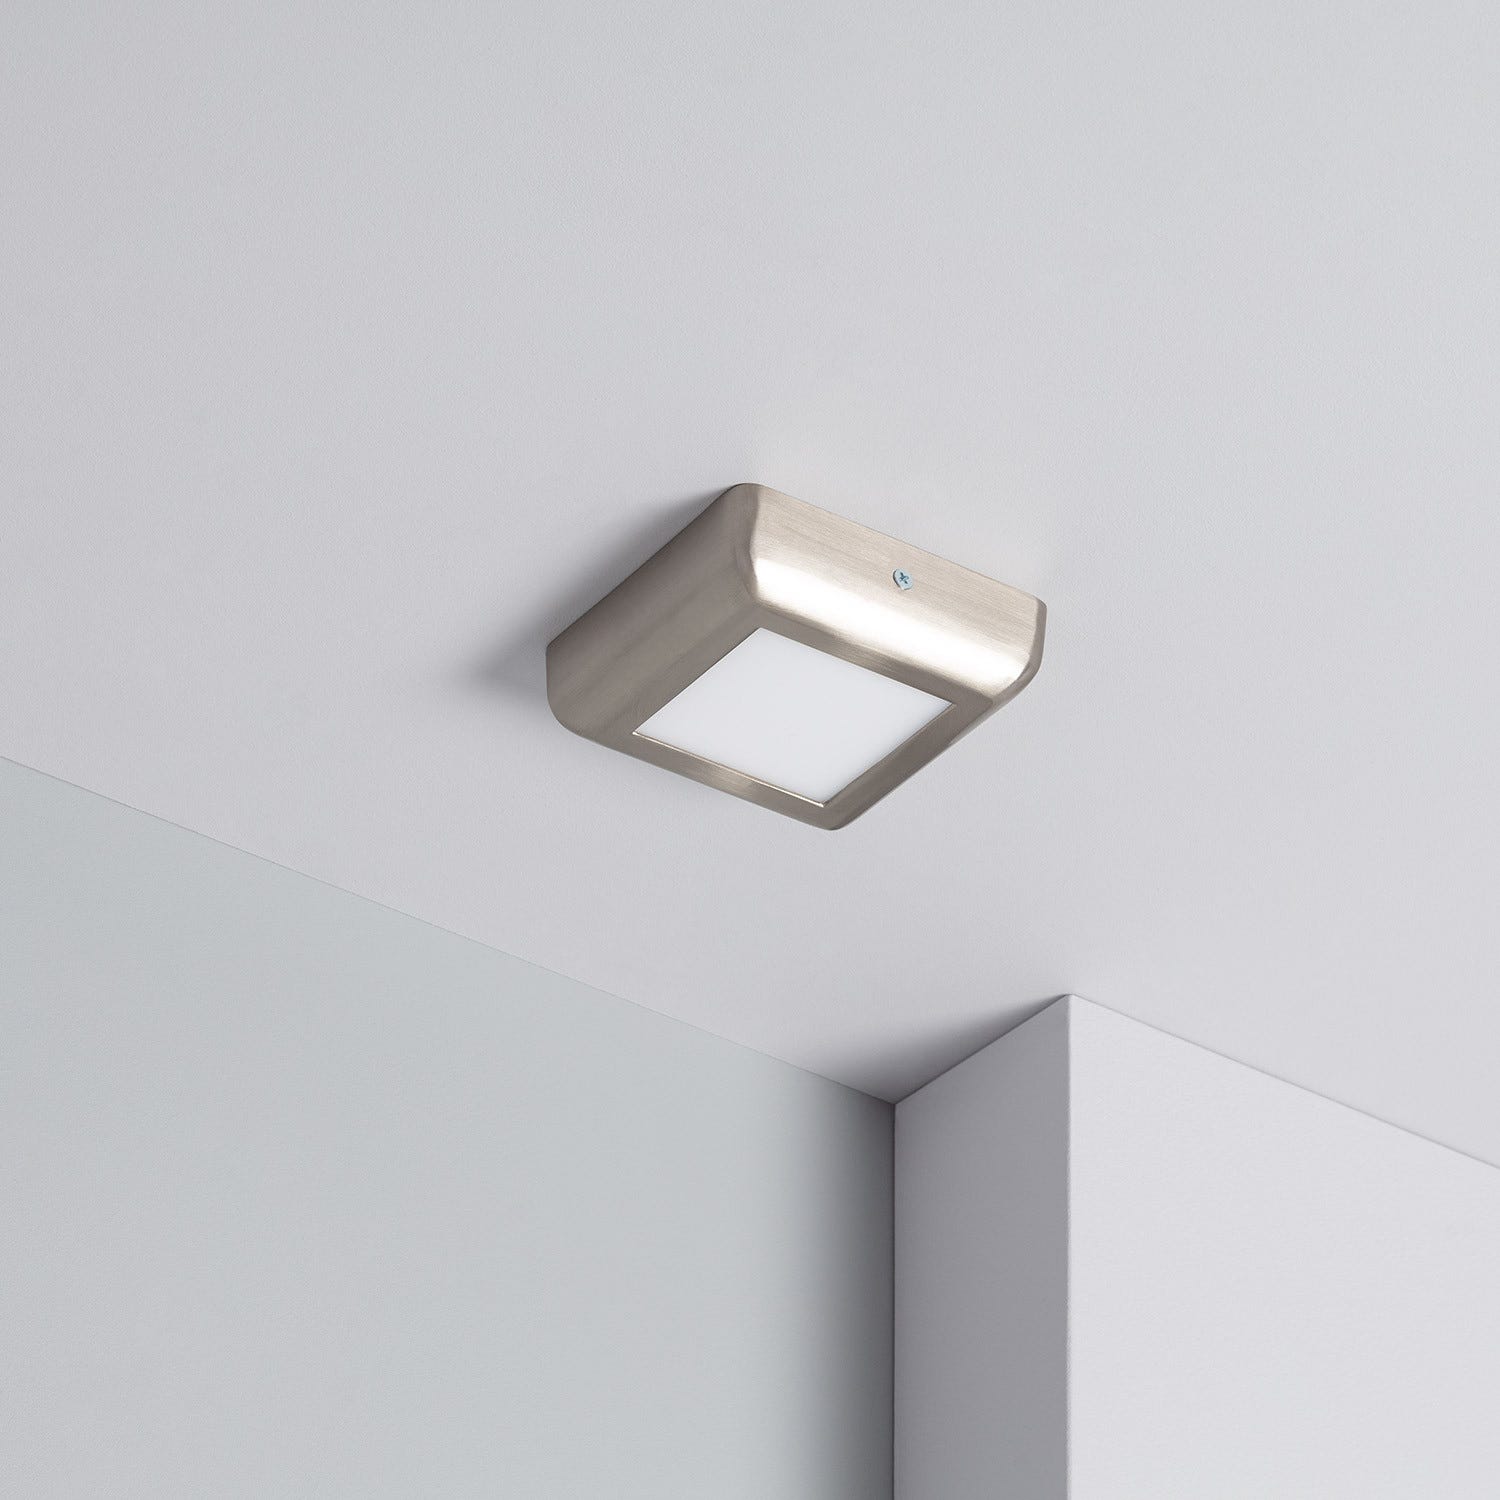 Plafoniera moderna LED 70W lampada quadrata luce soffitto camera letto 230V